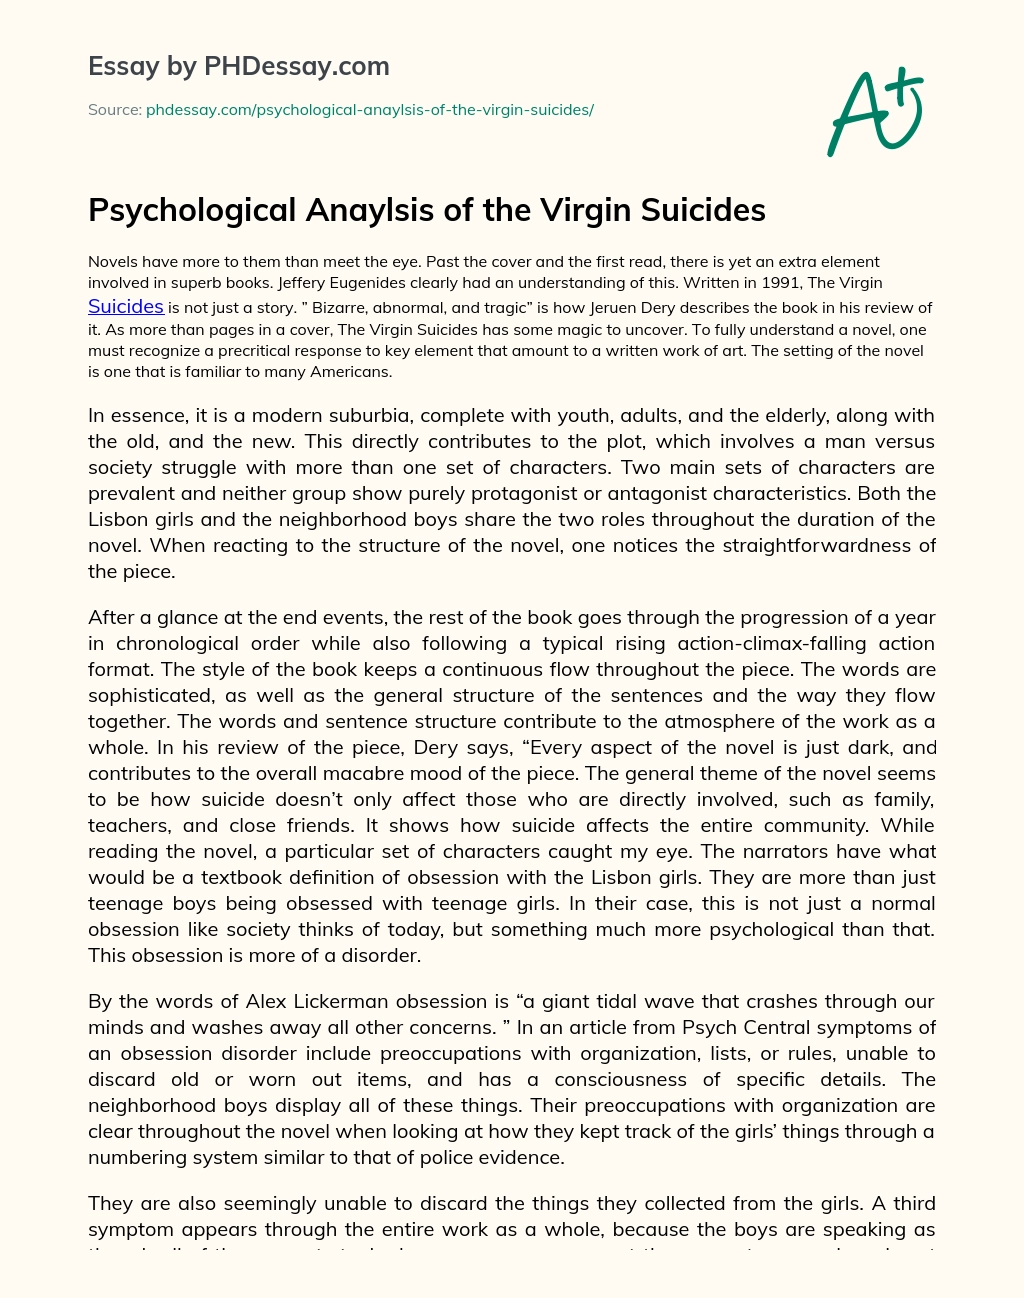 Psychological Anaylsis of the Virgin Suicides essay